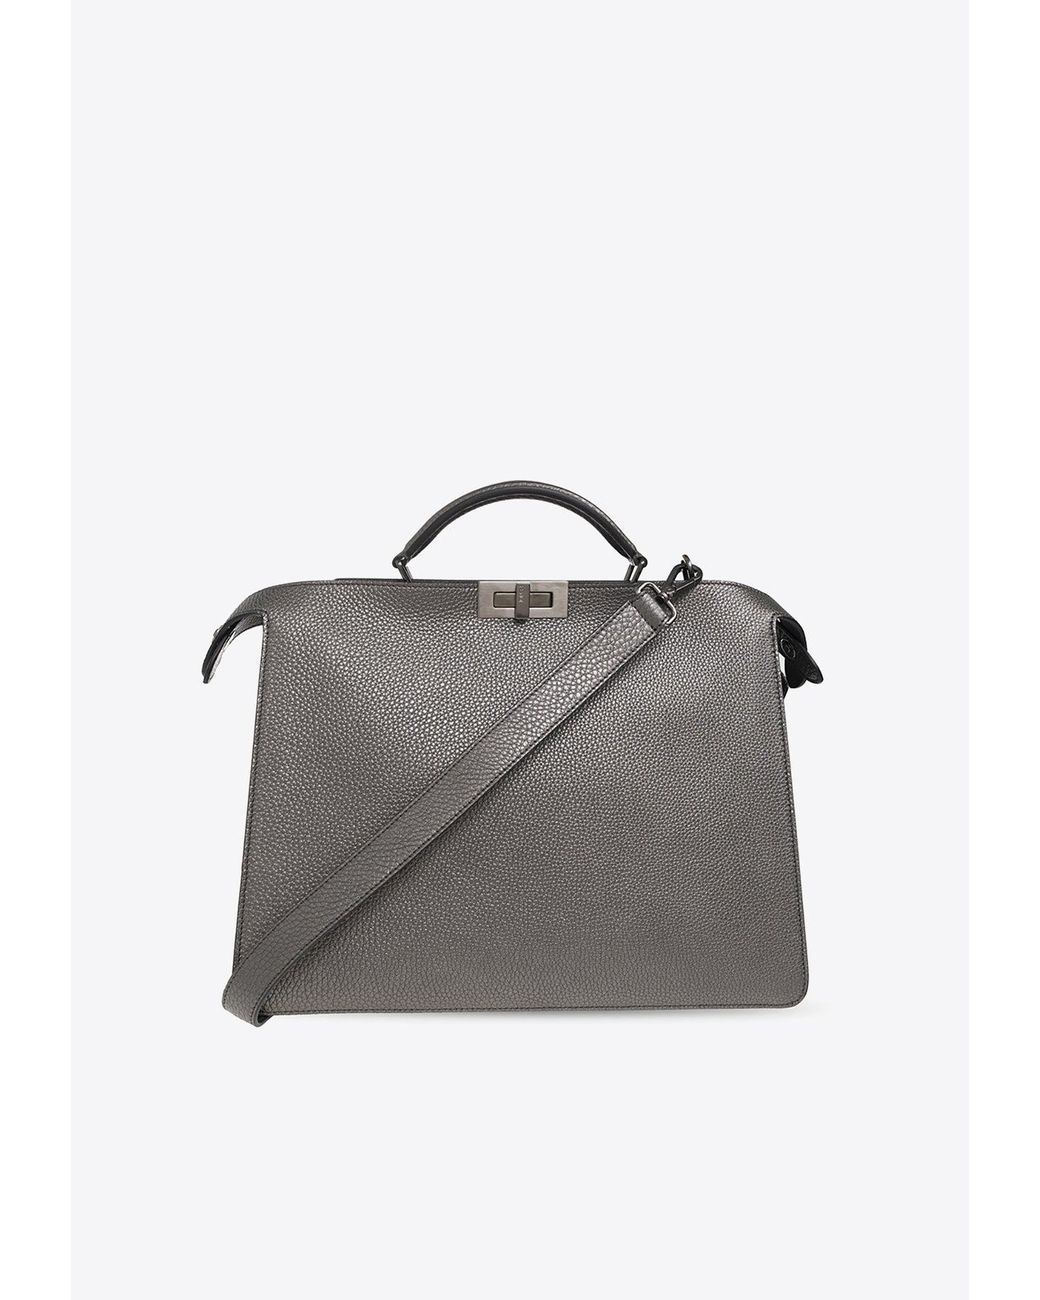 Fendi Medium Peekaboo Iseeu Top Handle Bag In Metallic Leather in Gray ...